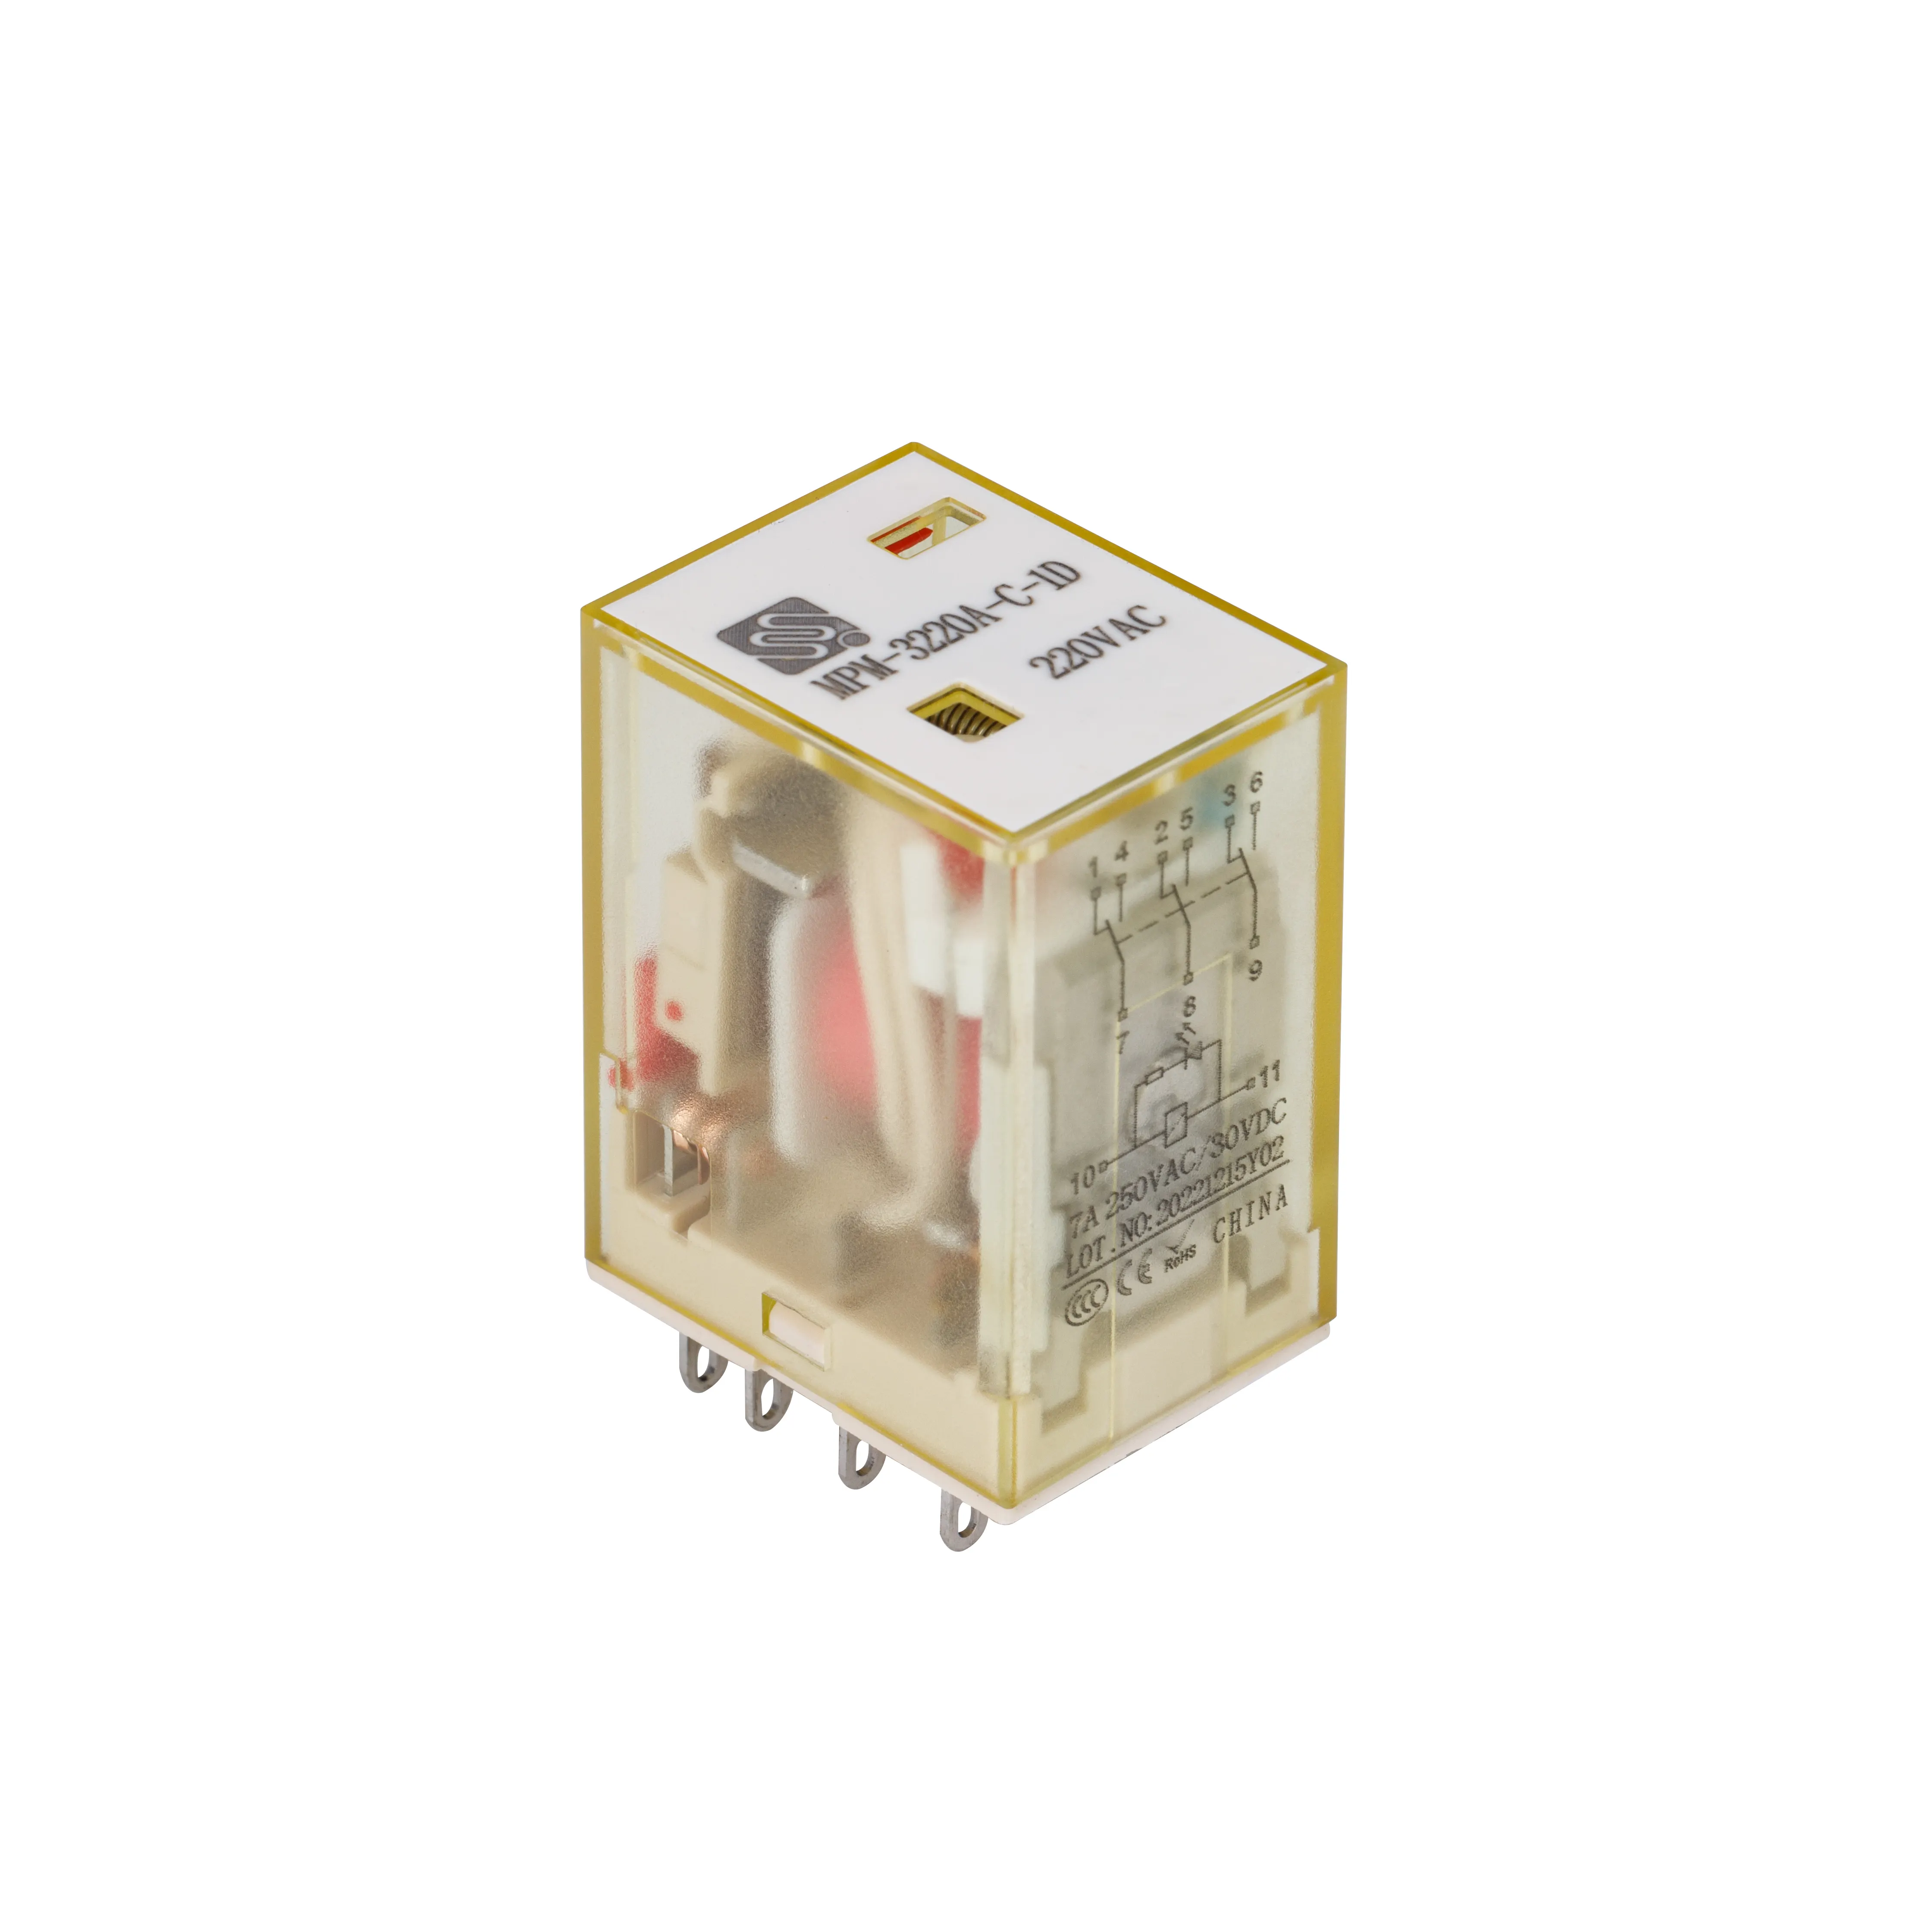 Meishuo MPM-3220A-C-1D 220VAC 8 pin relè di protezione per uso generale mini relè elettrico industriale 24v relè 12v